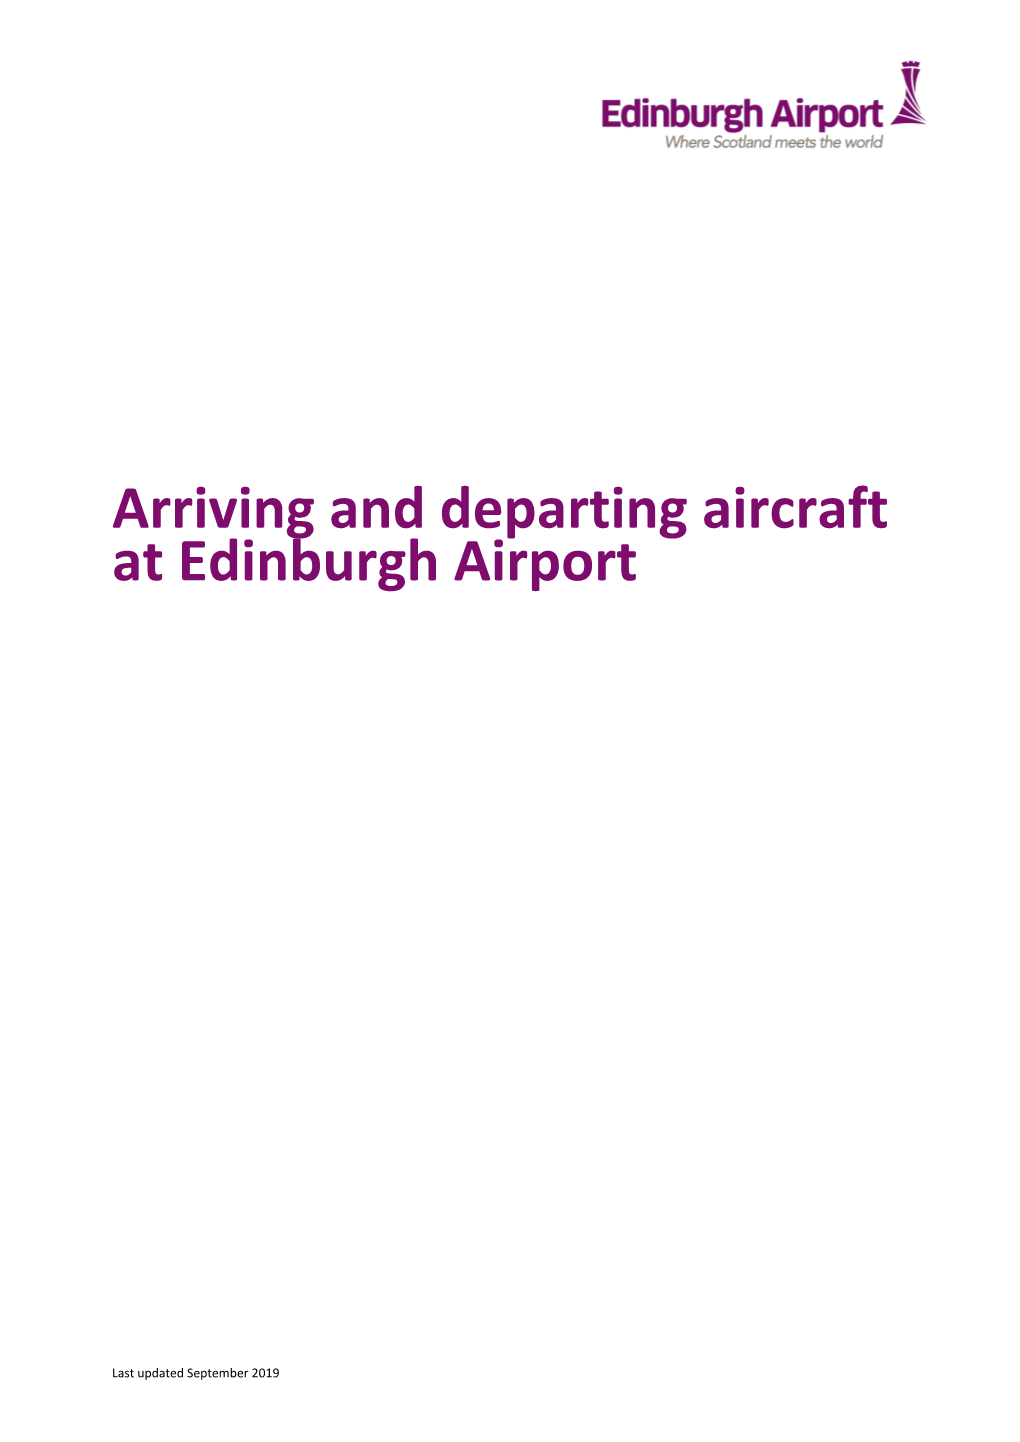 Arriving and Departing Aircraft at Edinburgh Airport